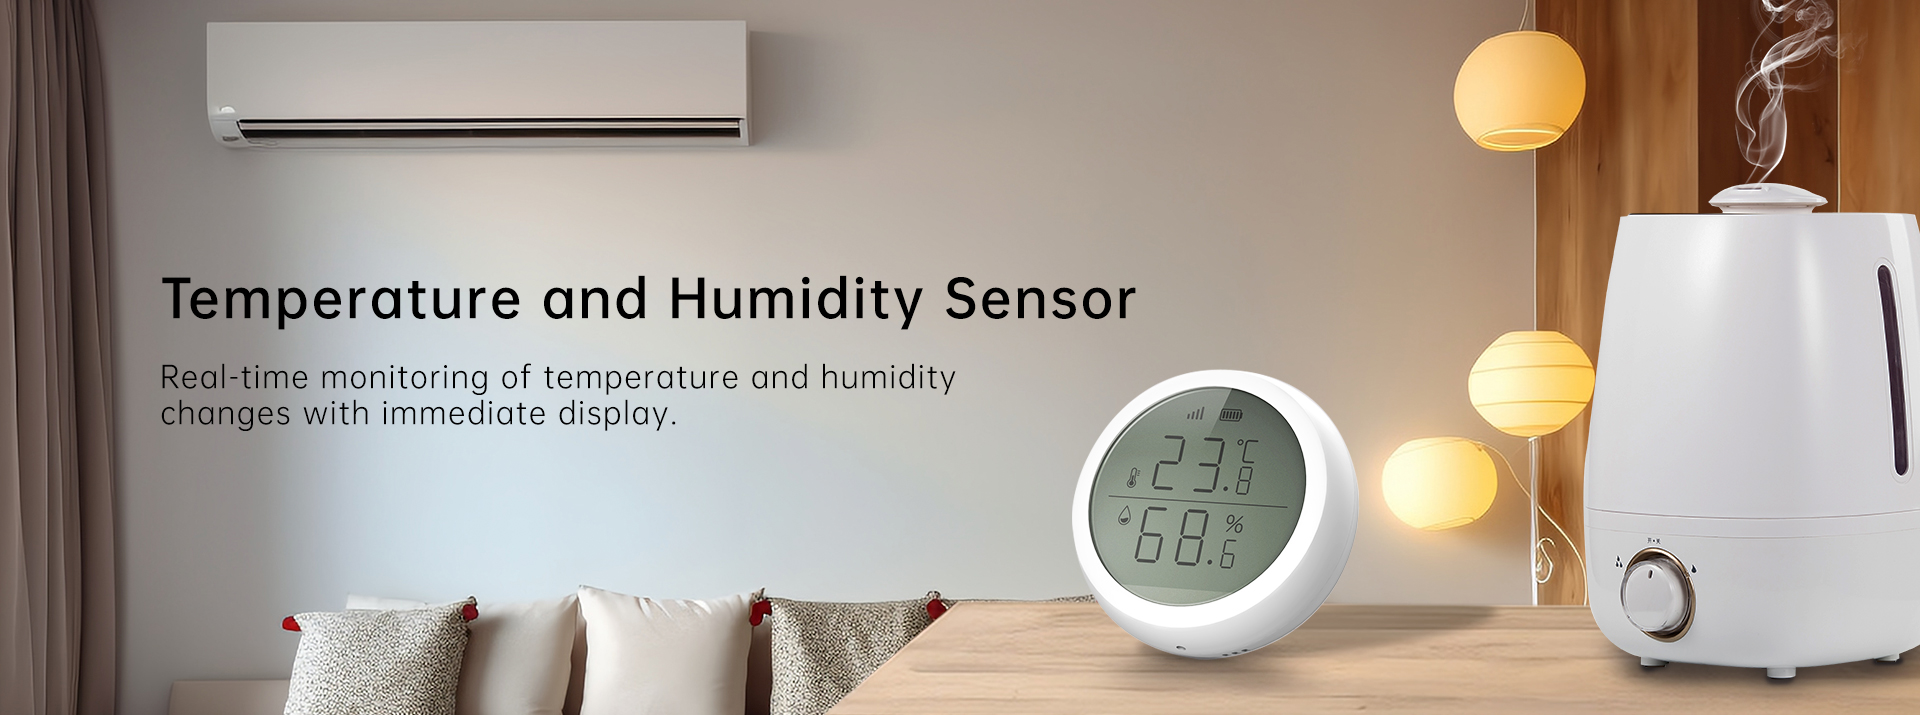 Senzor temperature i vlažnosti